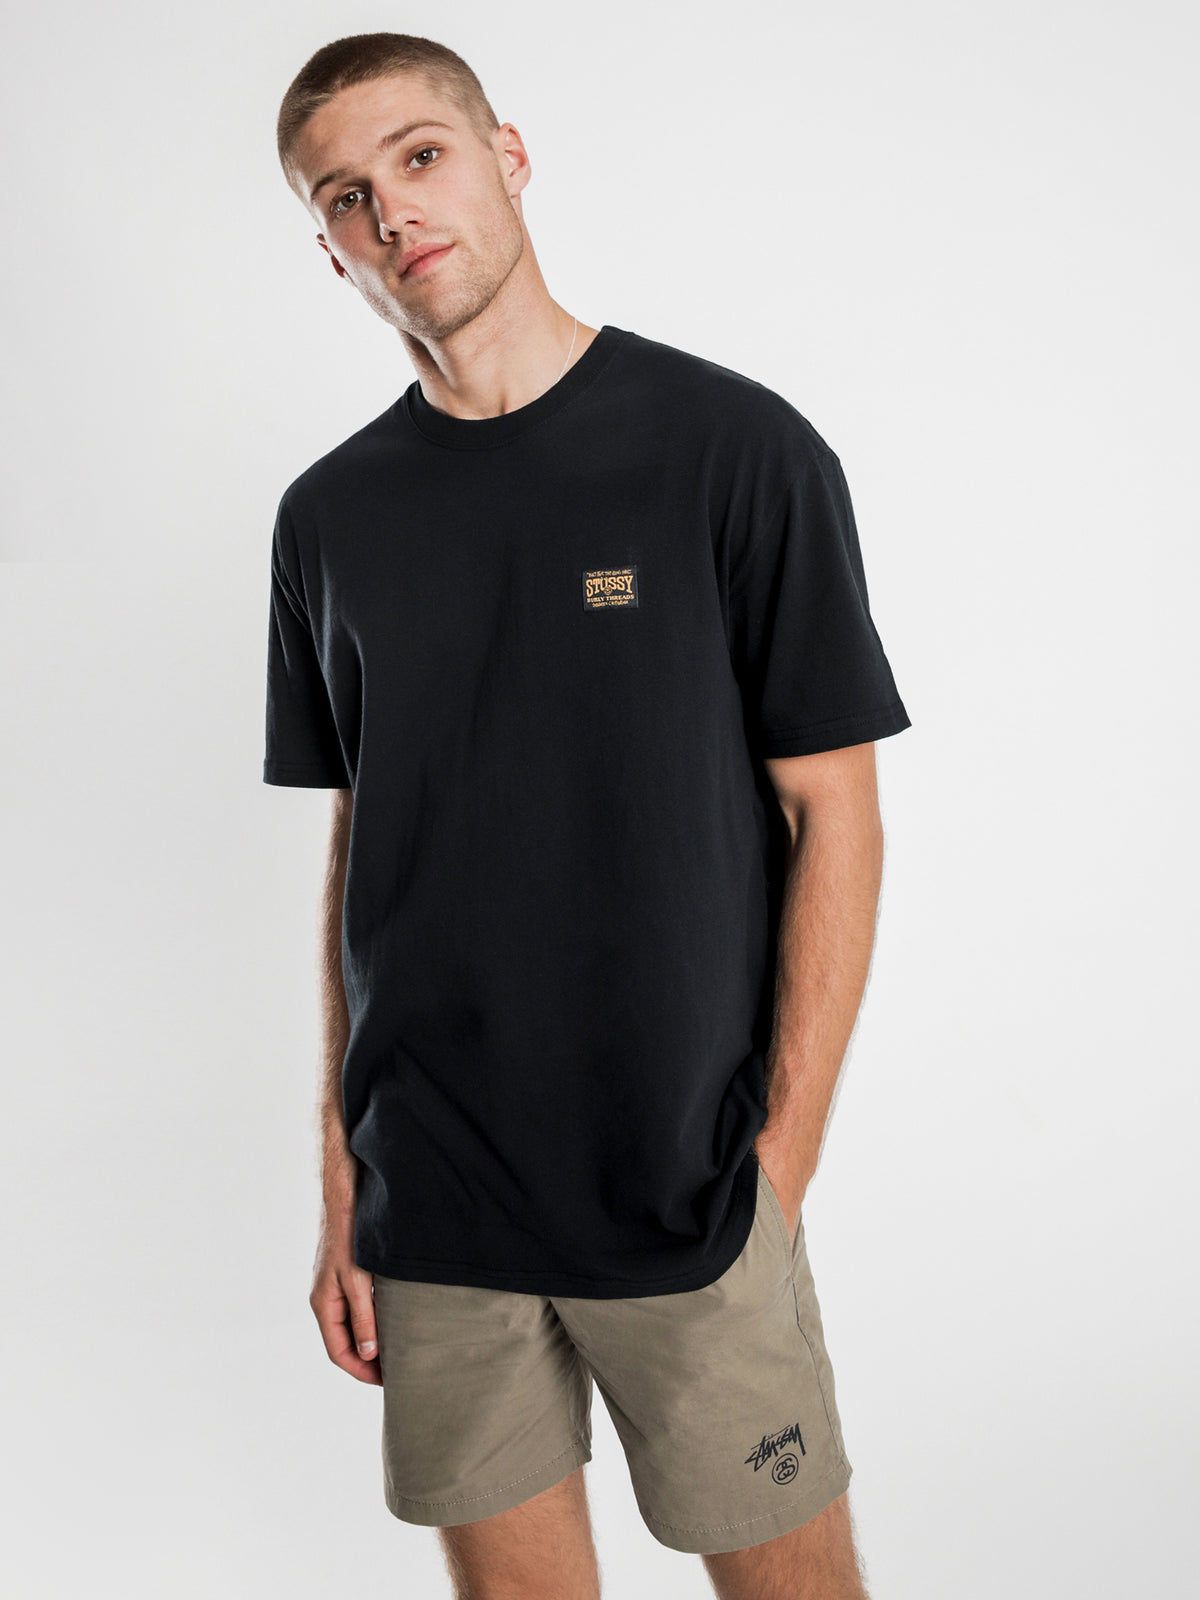 Long Haul Short Sleeve T-Shirt in Black